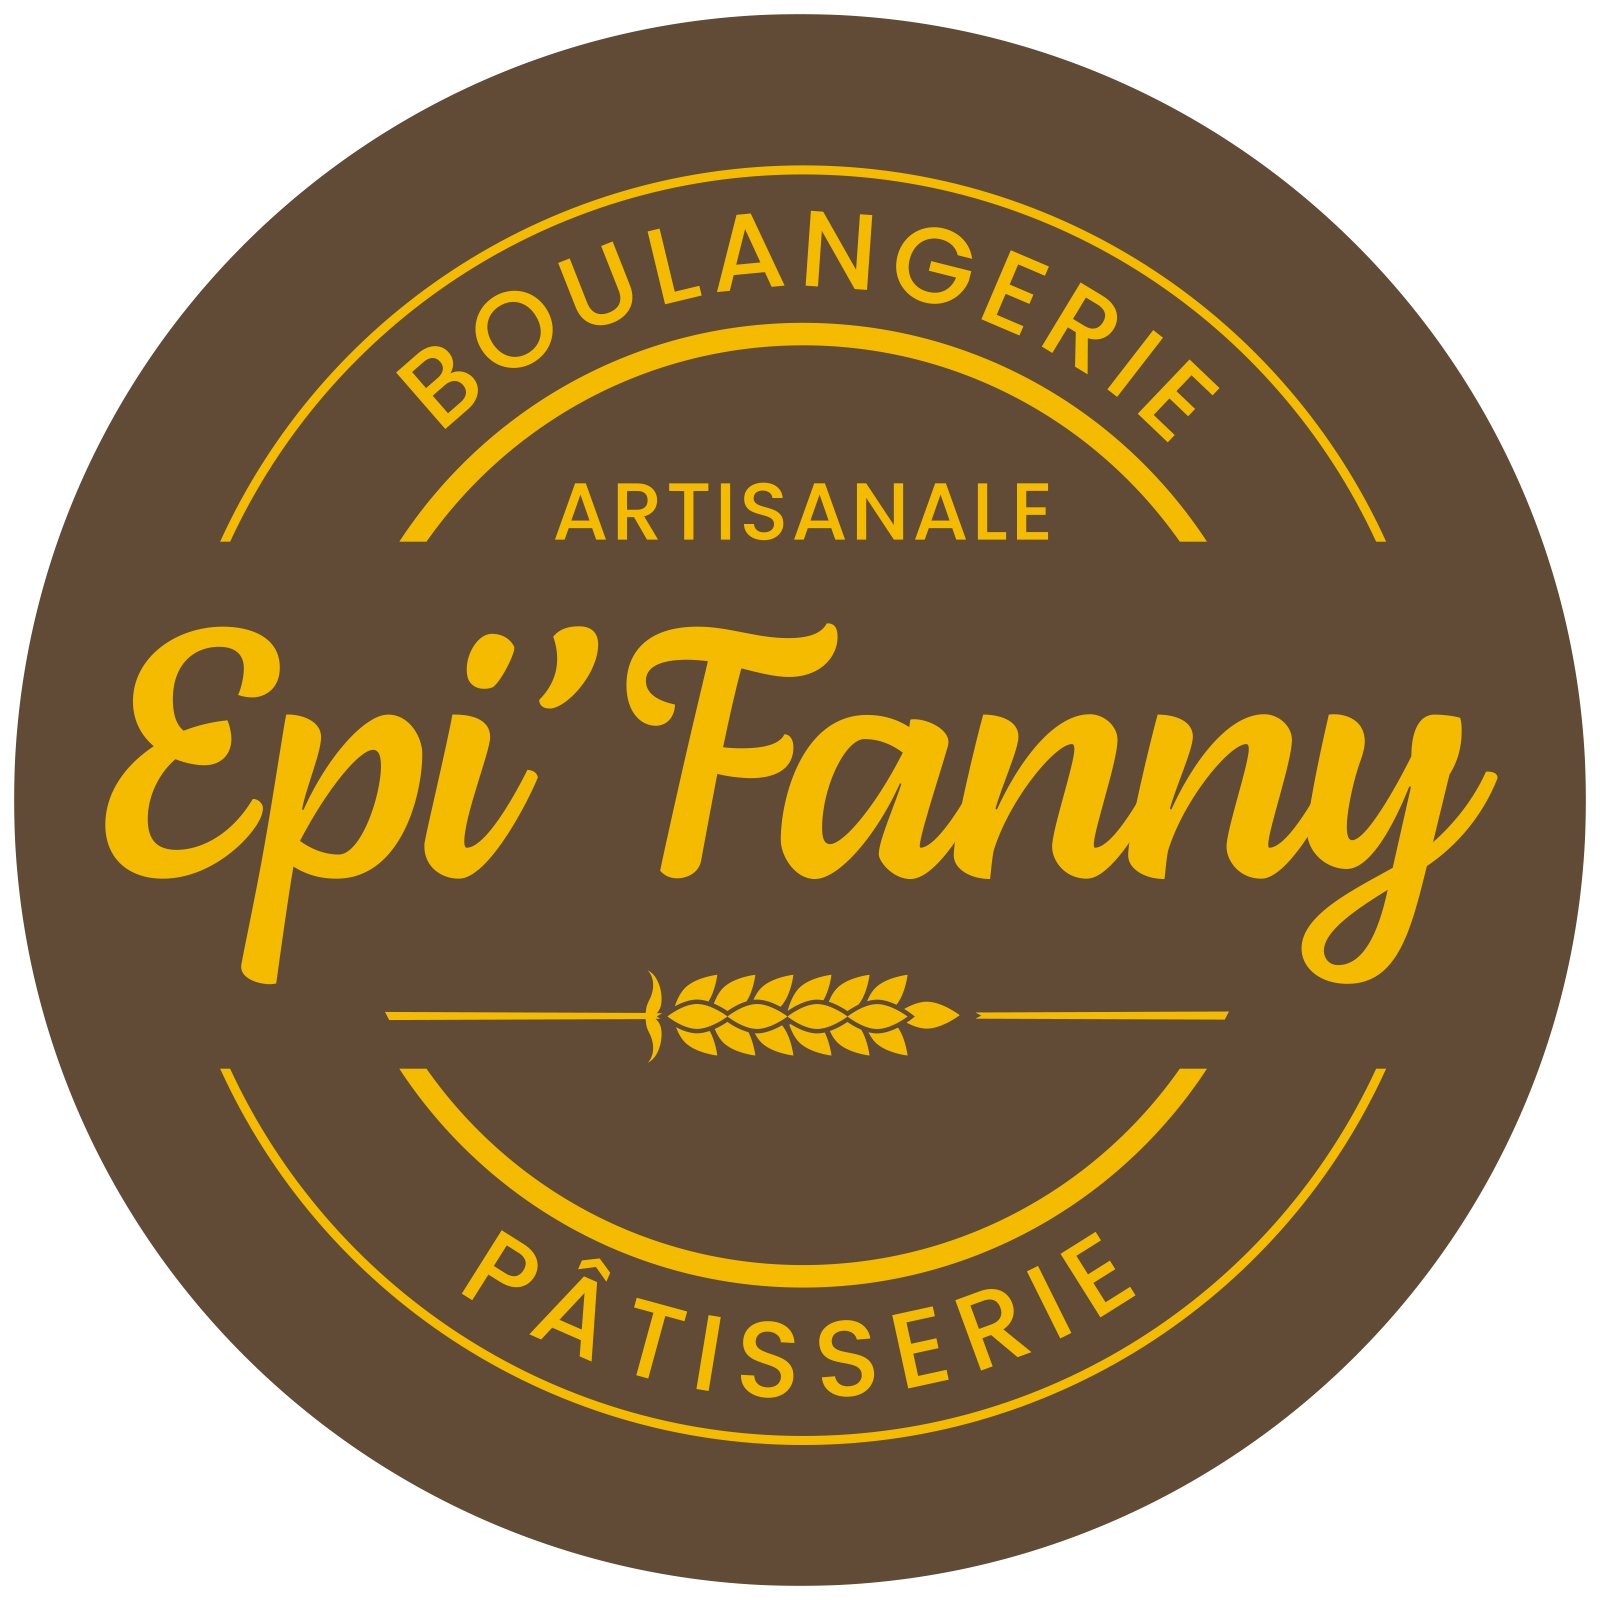 Boulangerie Epi’ Fanny